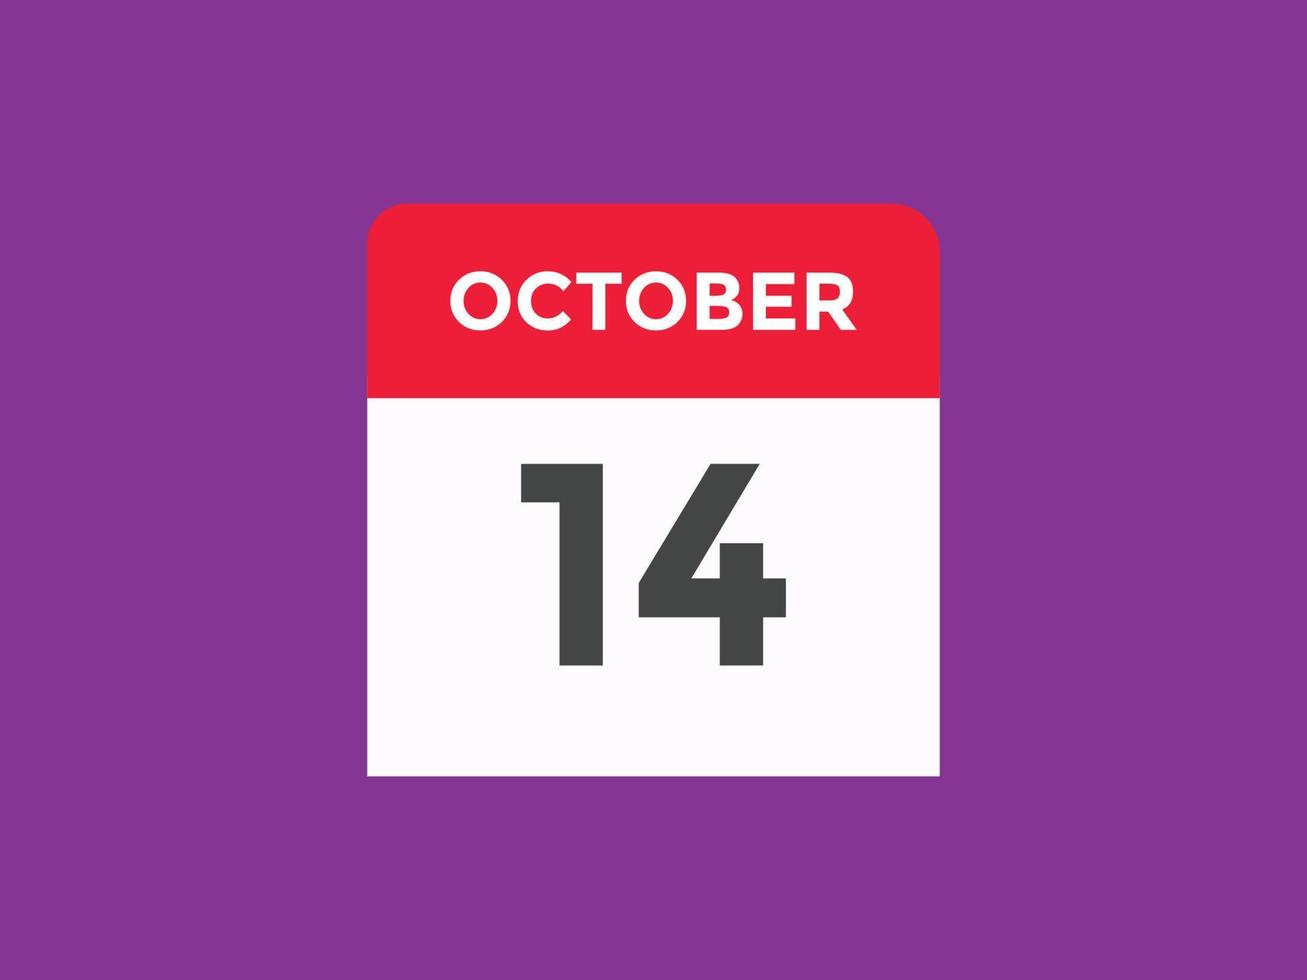 october 14 calendar reminder. 14th october daily calendar icon template. Calendar 14th october icon Design template. Vector illustration